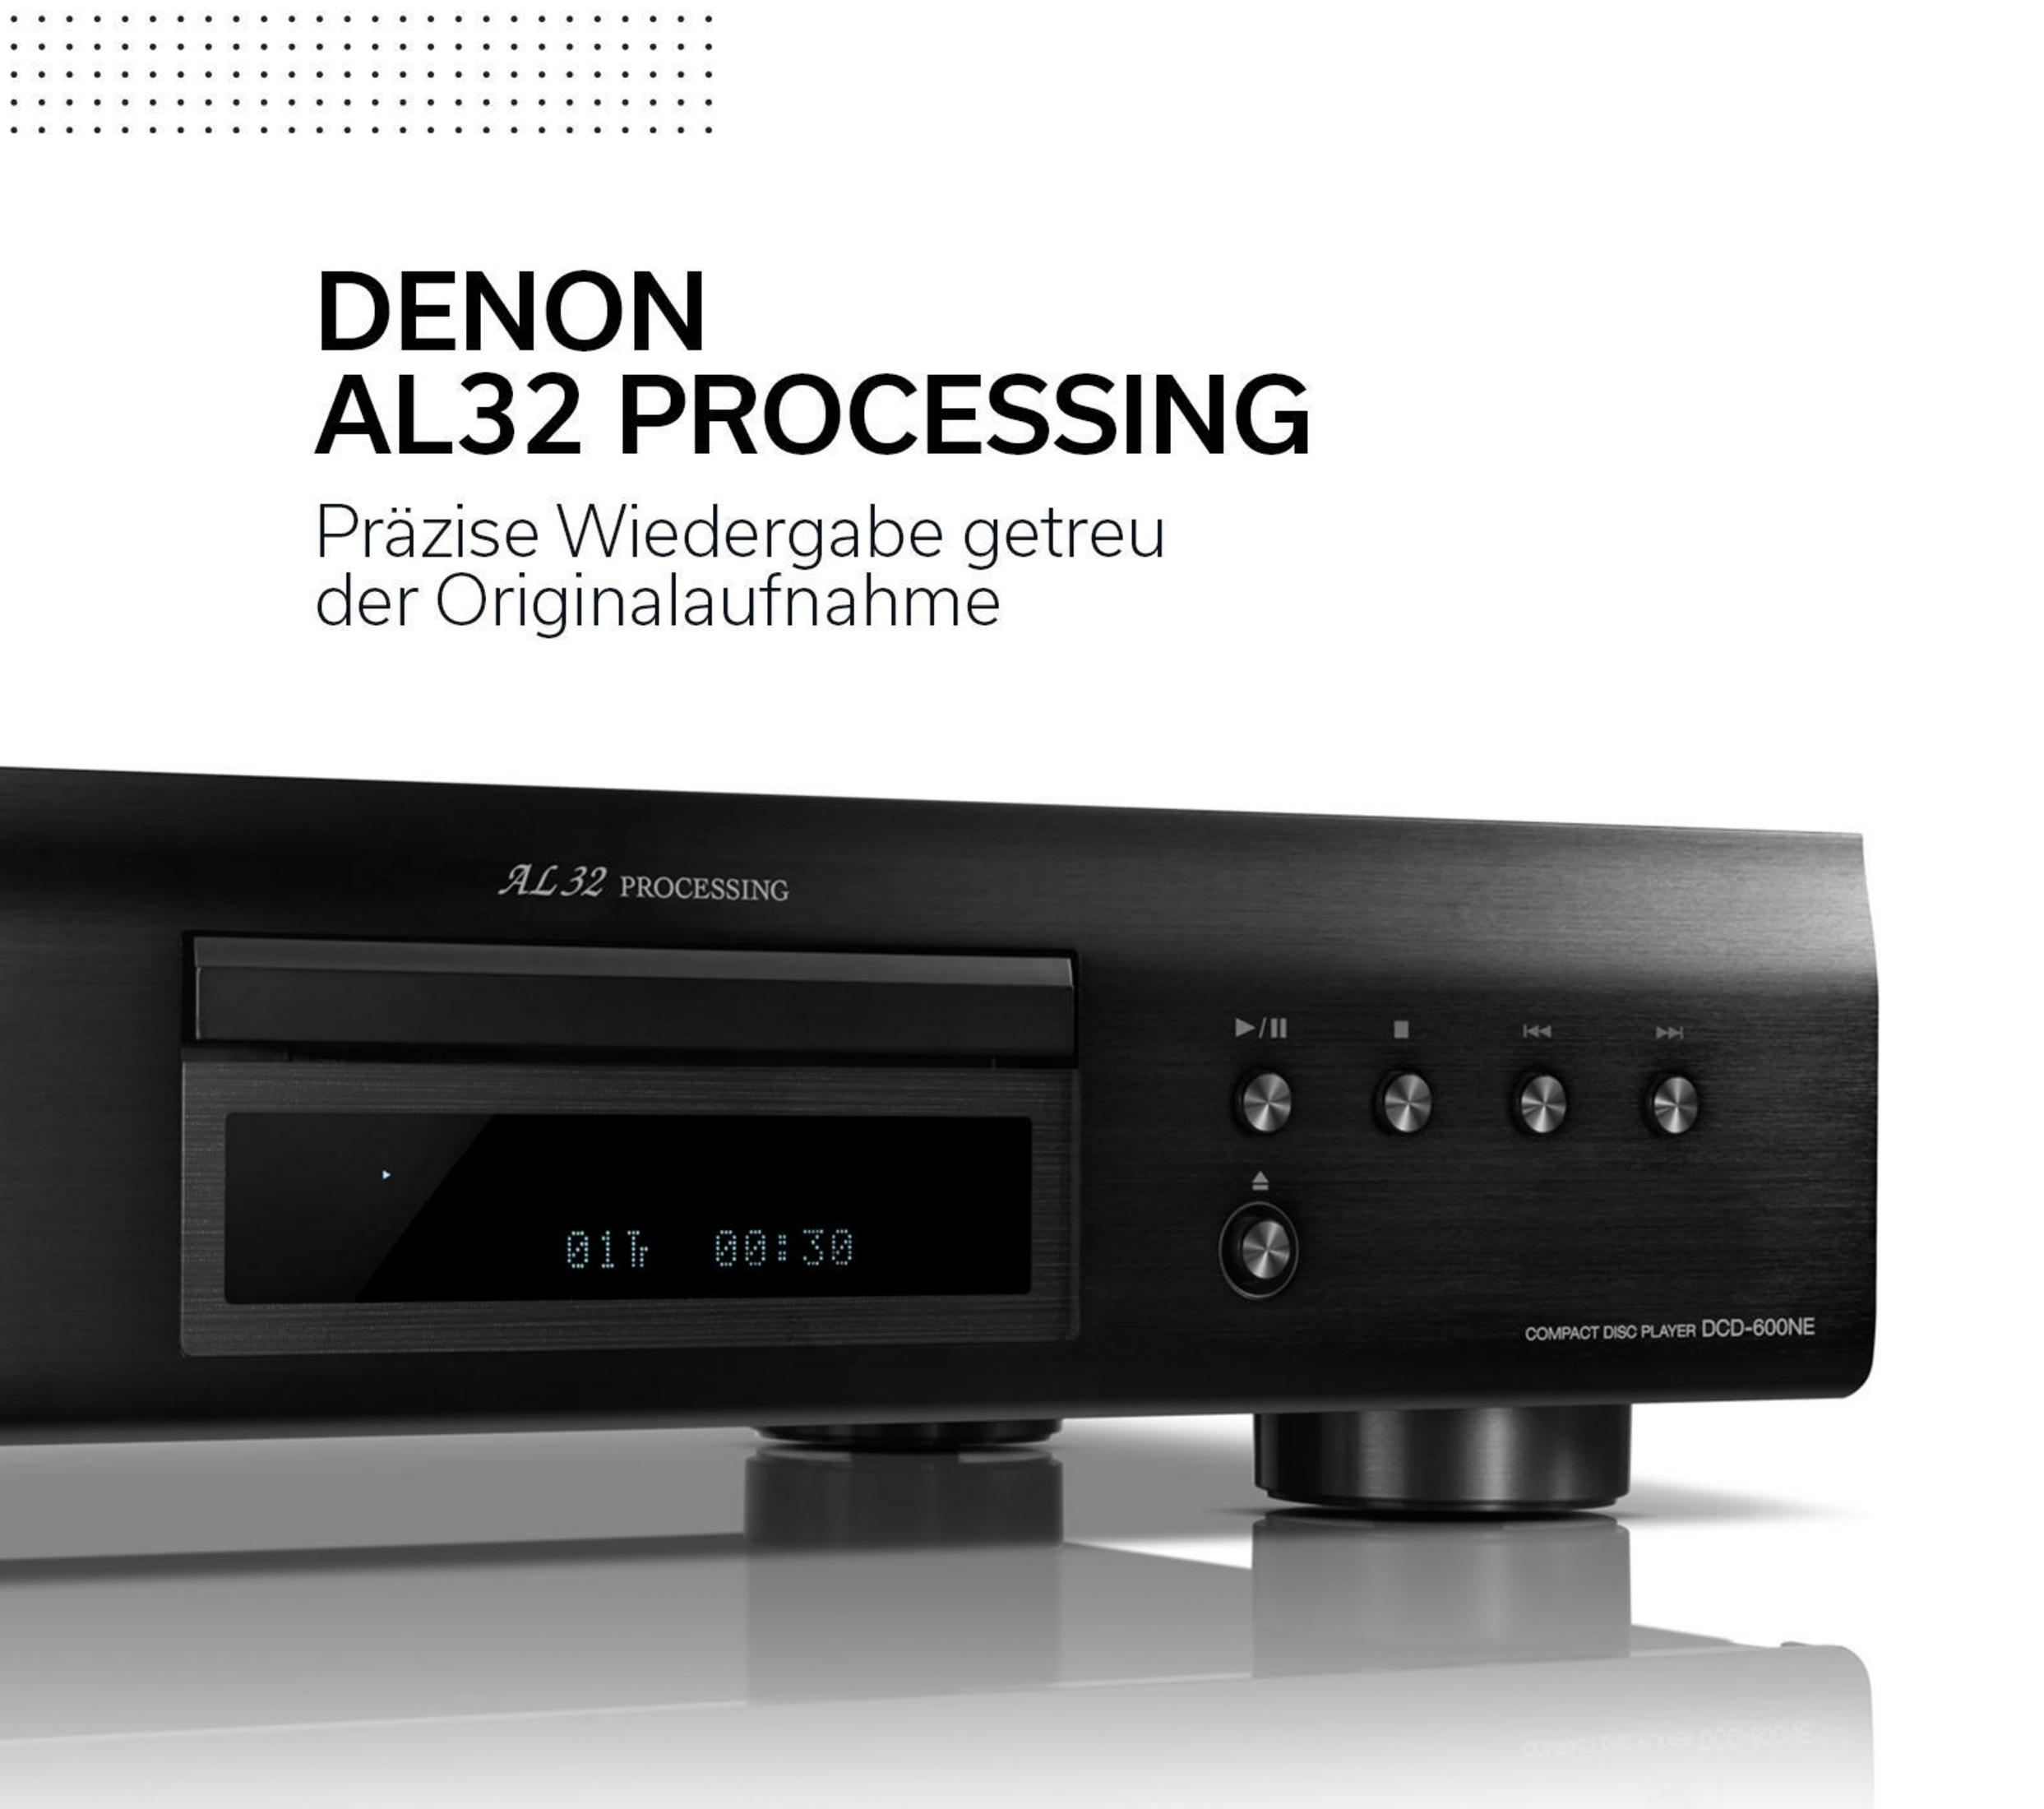 DENON DCD 1600 SCHWARZ HiFi-CD-Player, Schwarz NE